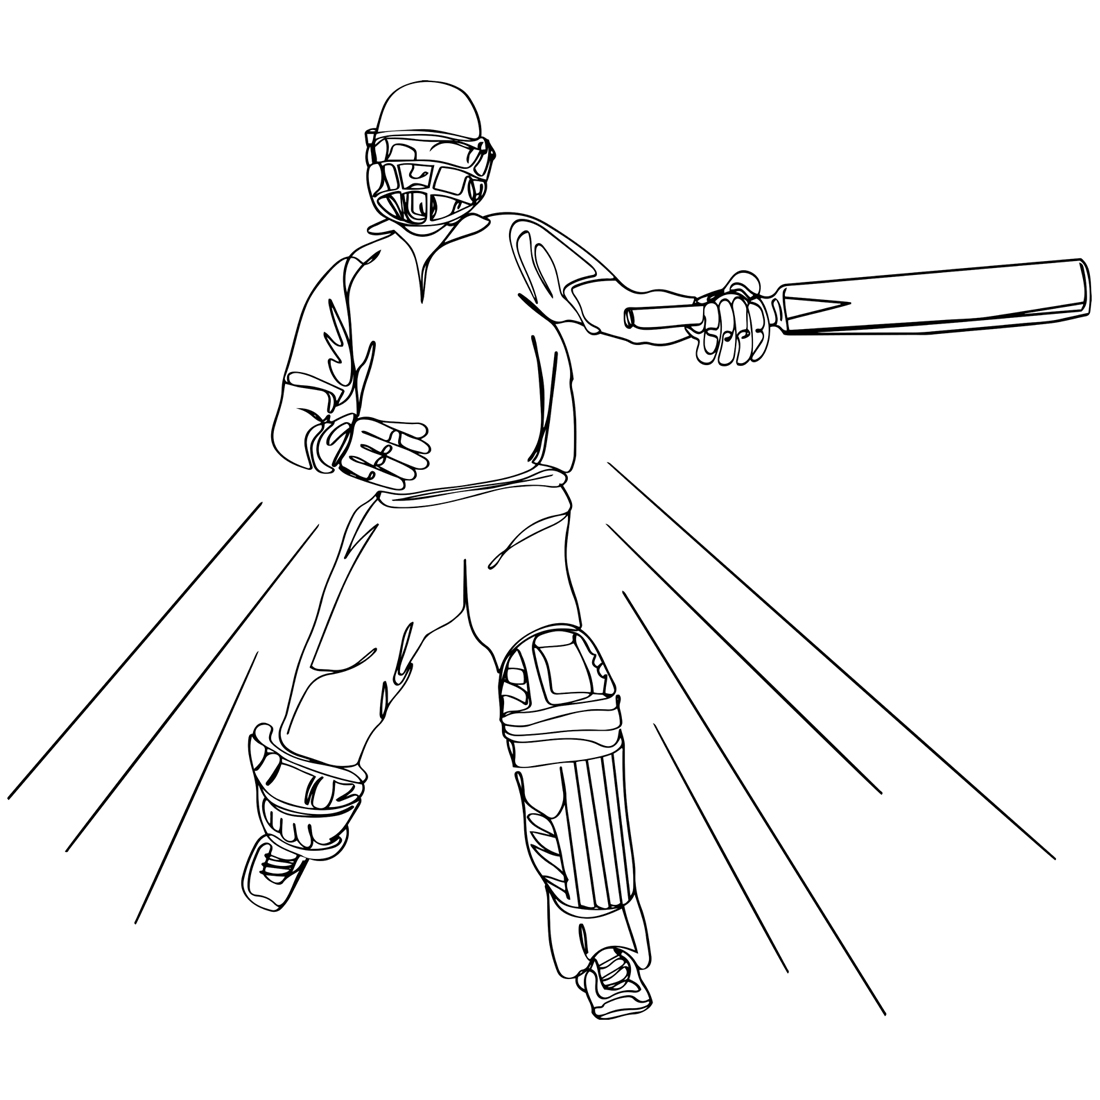 Victorious Jubilation: Hand-Drawn Illustration of Cricket Batsman's Century Leap, Cartoon Elation: Cricket Batsman Soars High in Celebration of a Century, cricket game vector cover image.